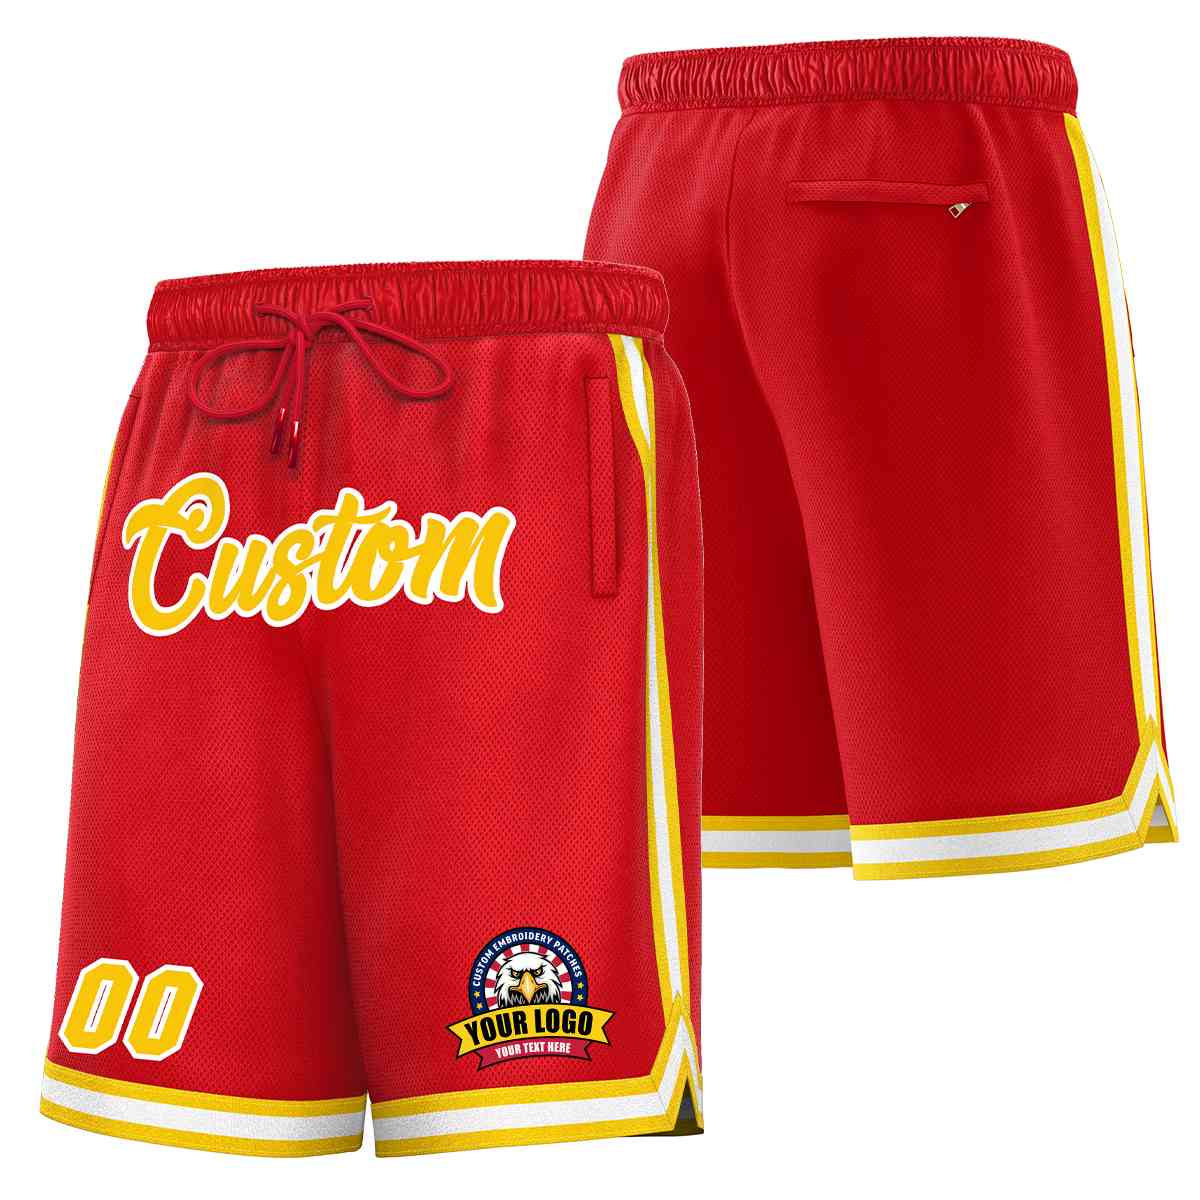 kxk custom red basketball shorts